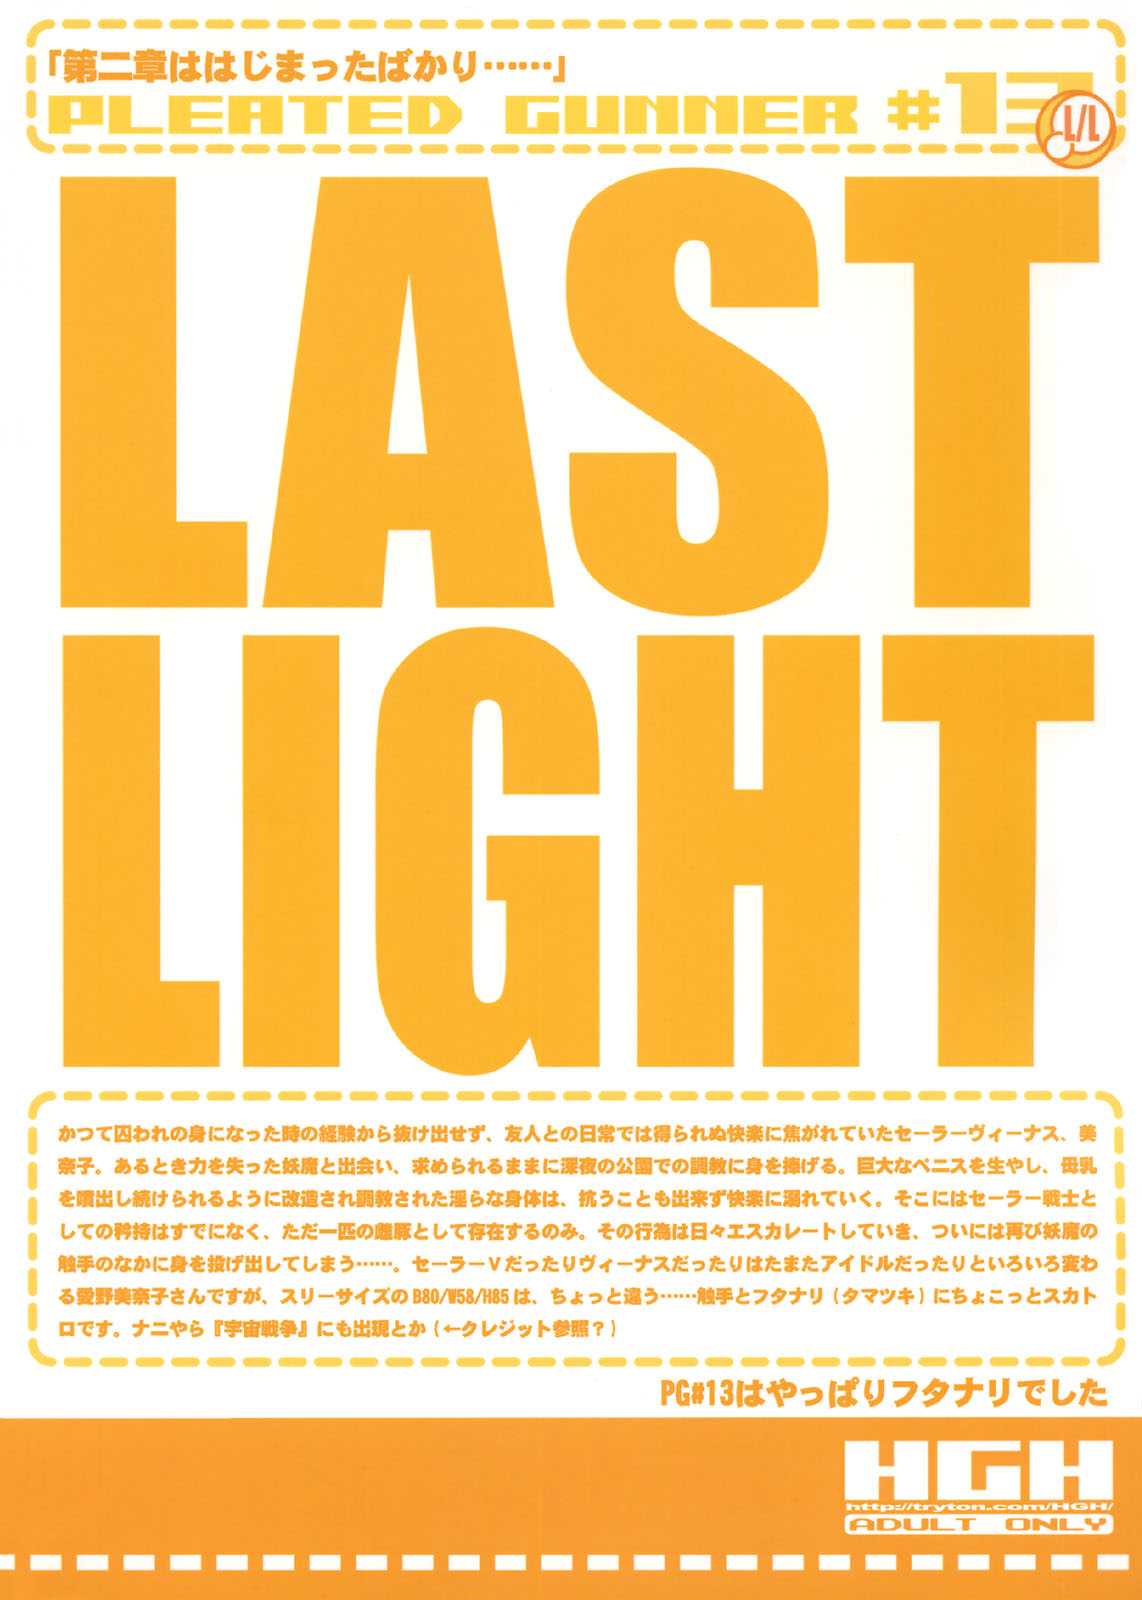 HGH - Last Light 